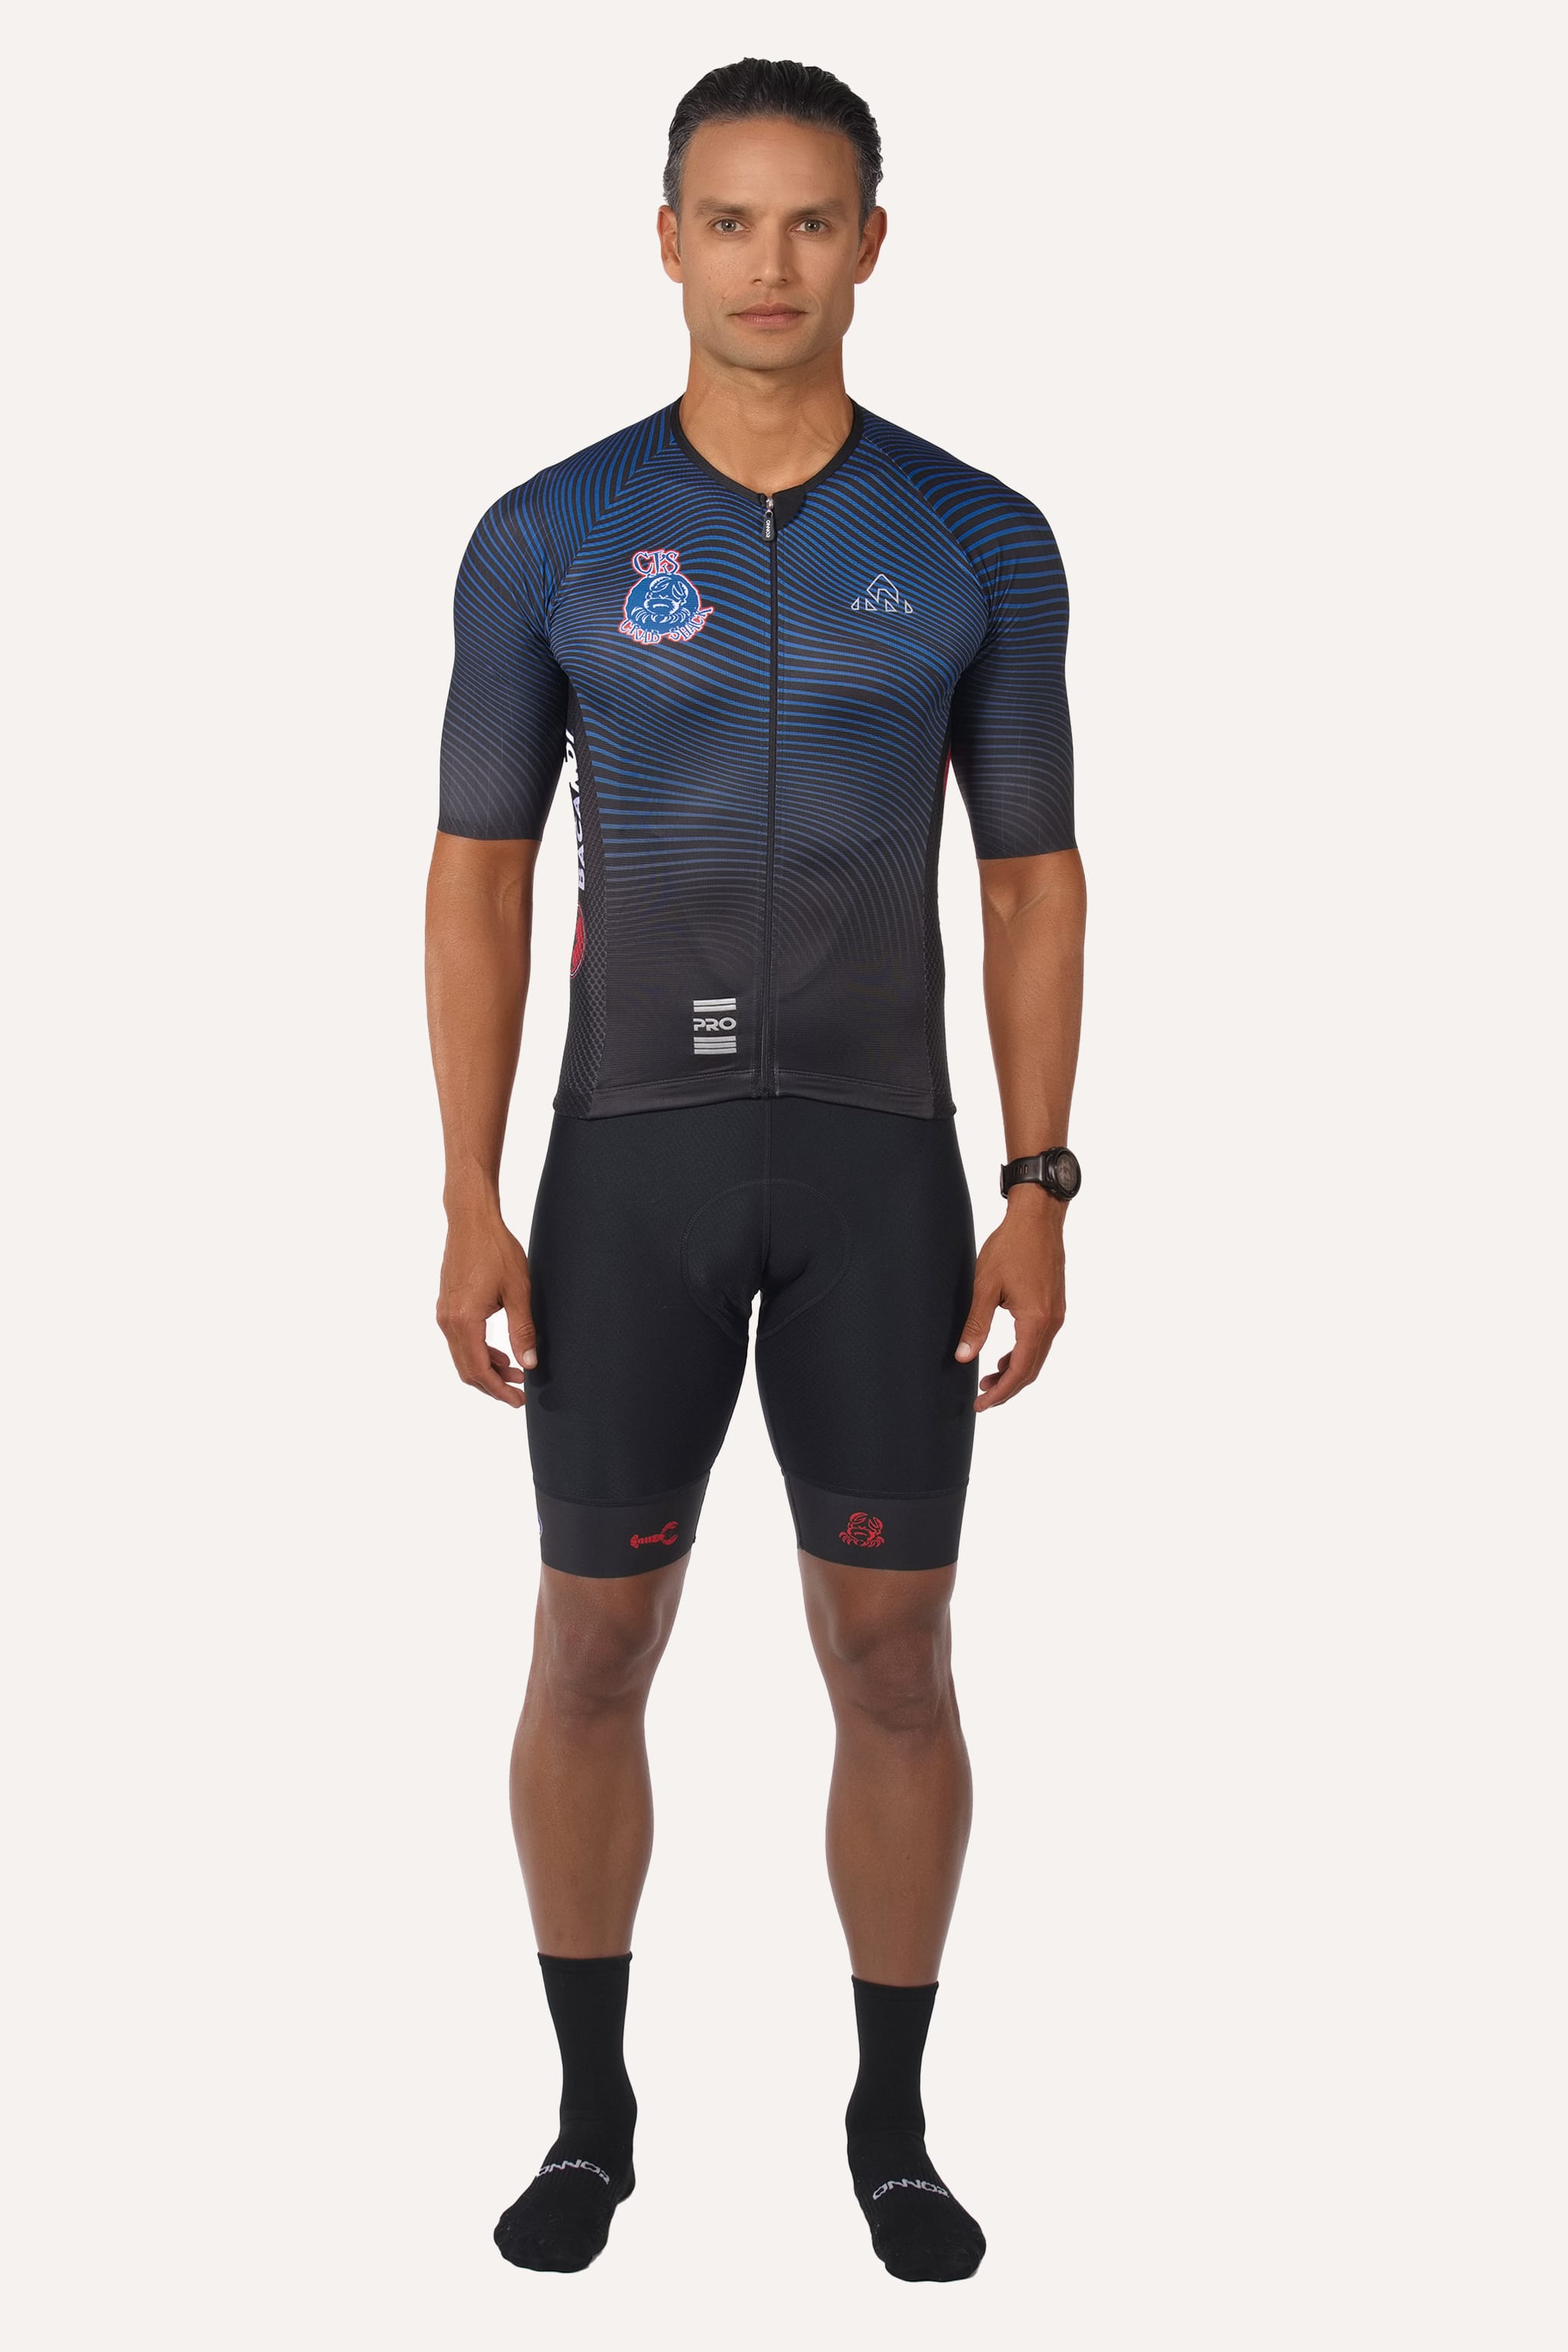 triathlon custom tri suit, cyling custom jersey, cycling custom skinsuit